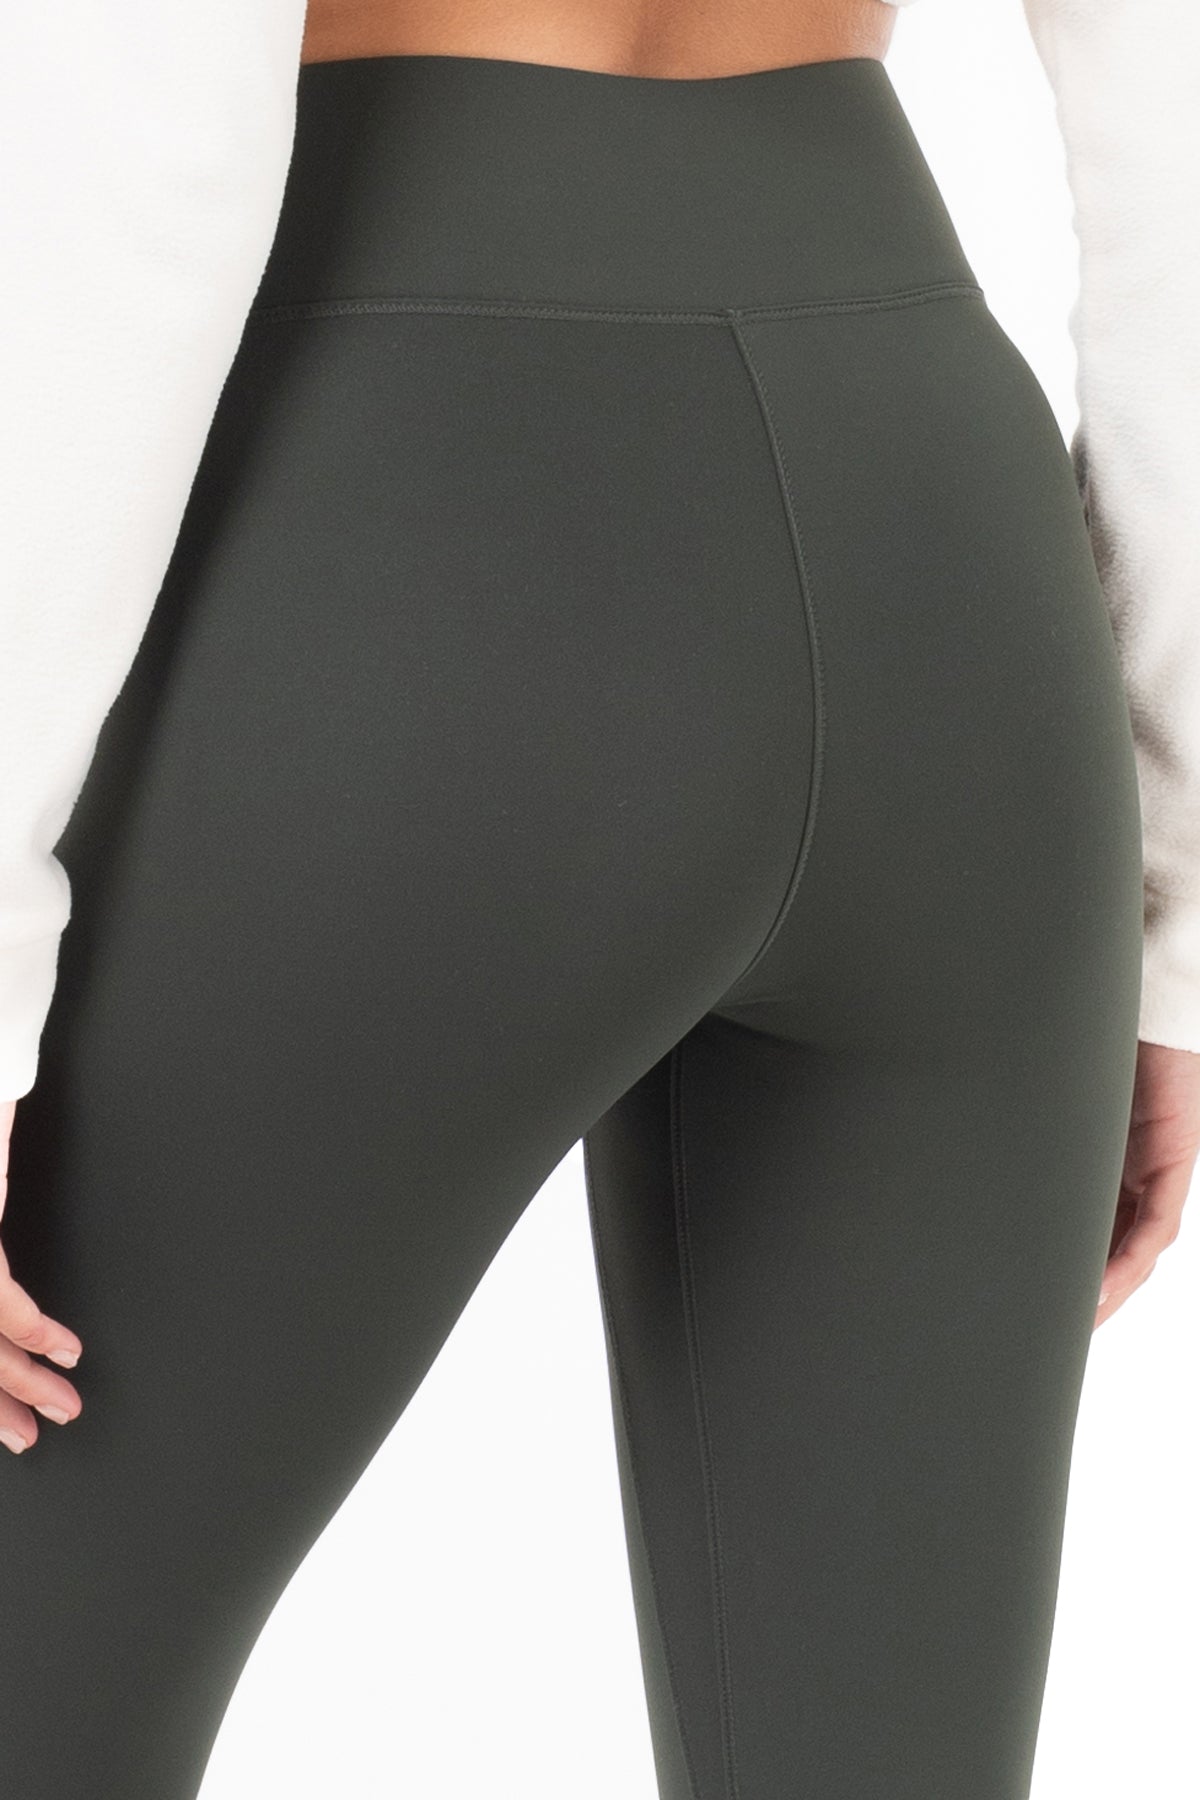 Kyodan Solid Black Active Pants Size P - 26% off